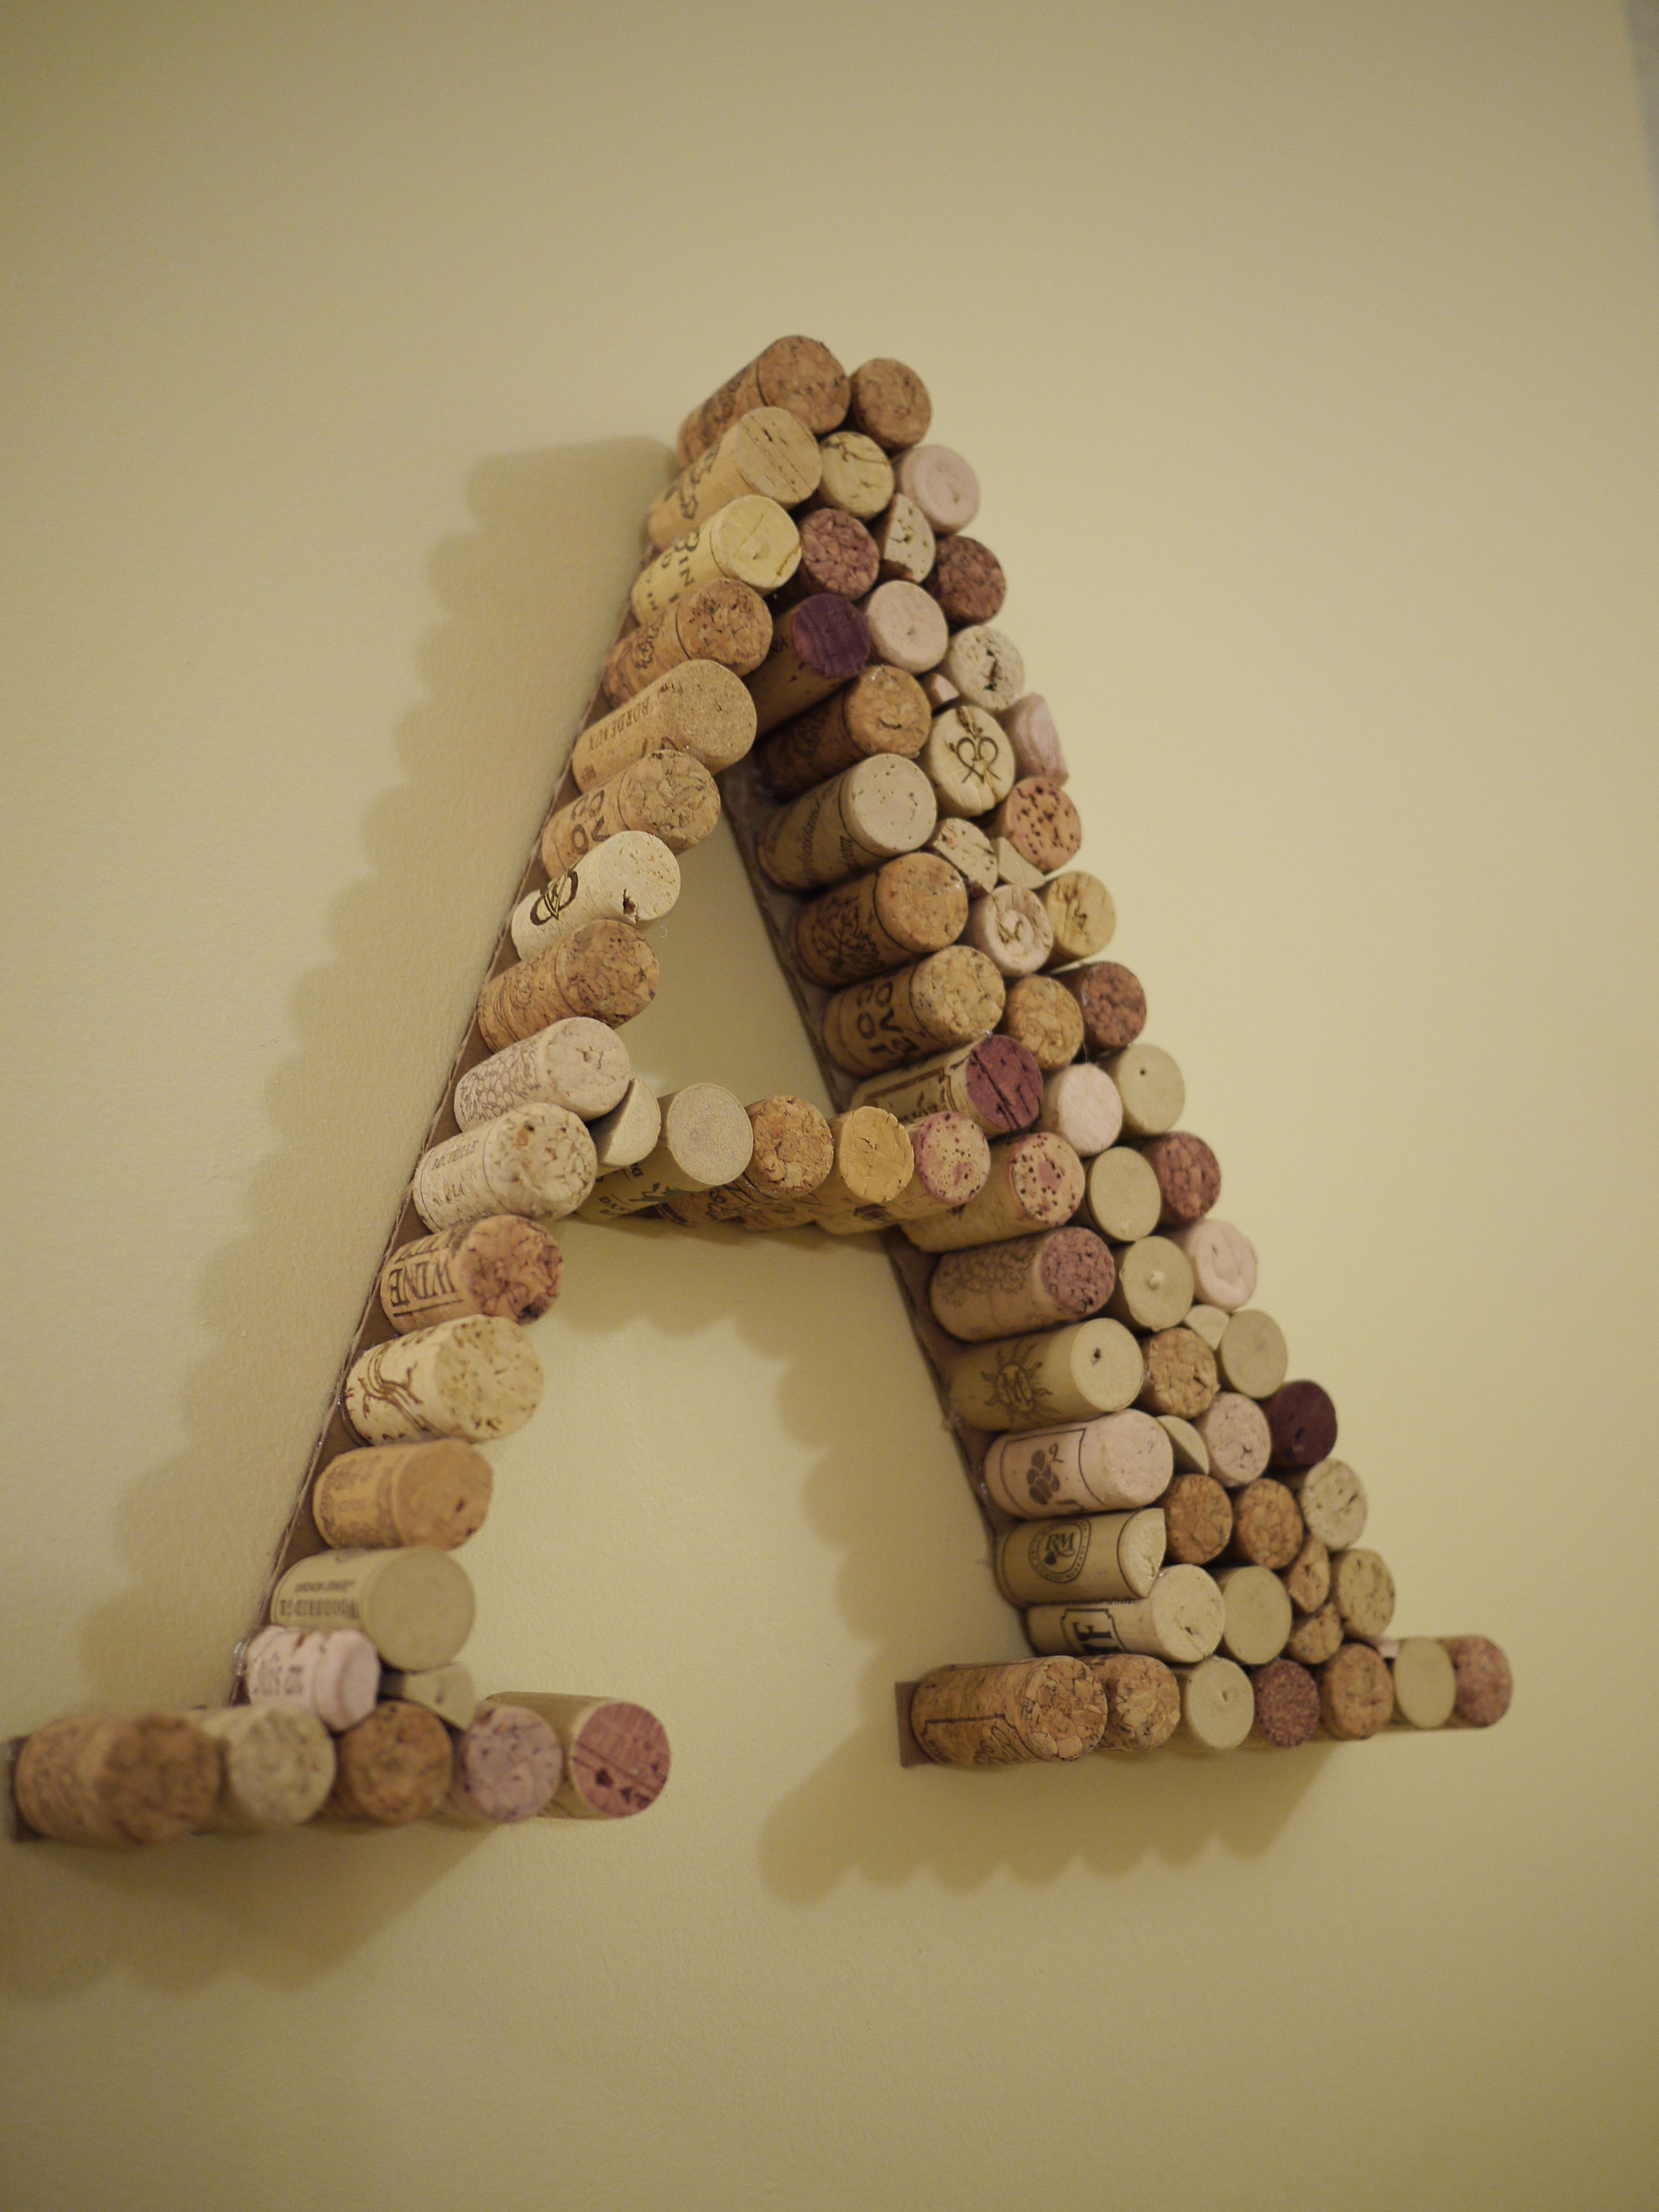 24 cork crafts initials
 ideas